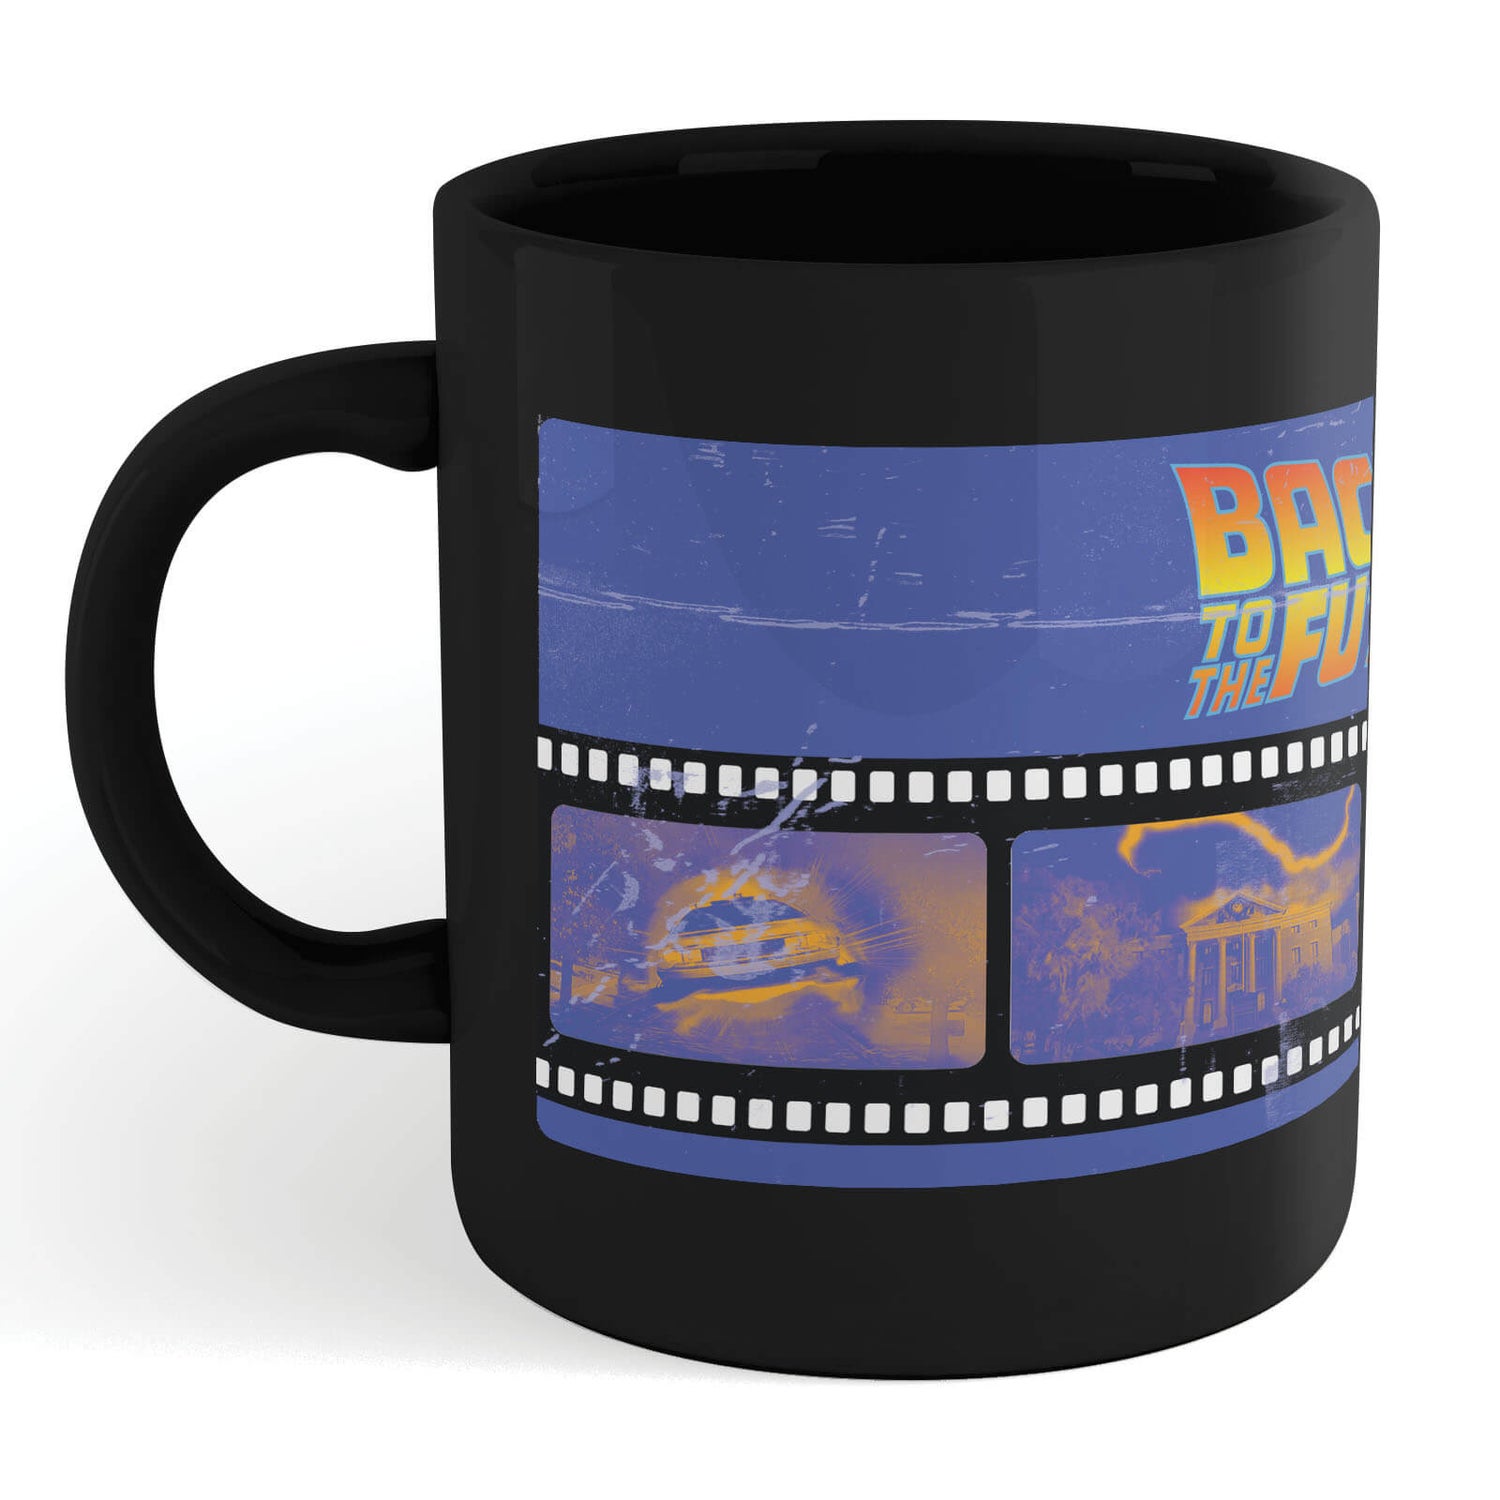 Back To The Future Film Reel Mug - Black